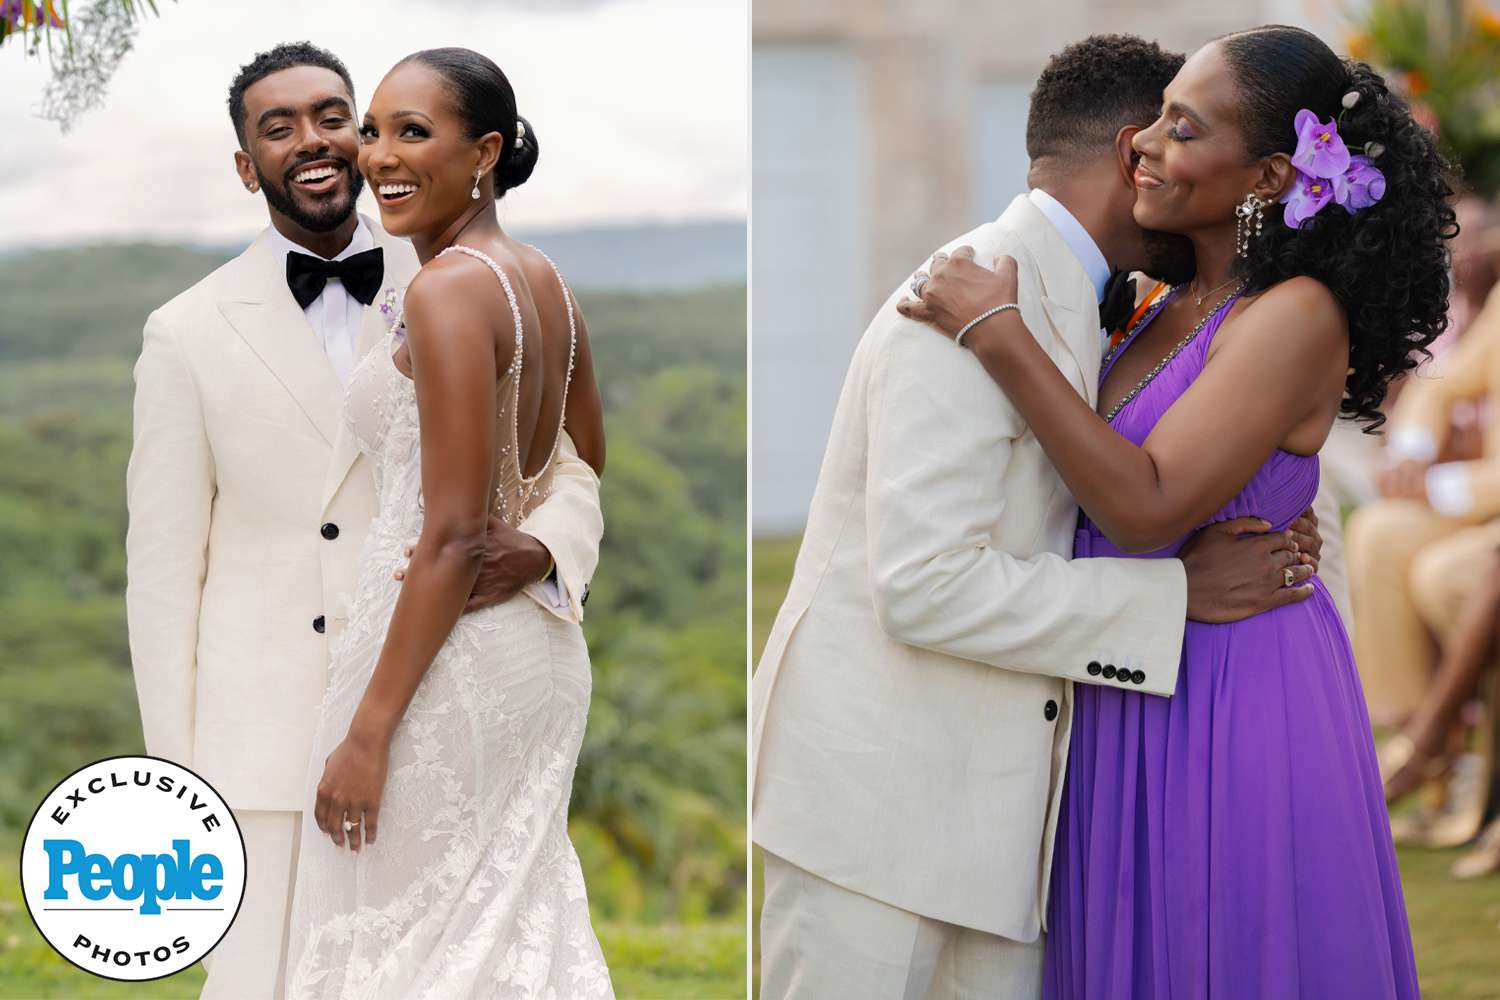 Etienne Maurice, Son of Sheryl Lee Ralph, Marries ABC News Journalist Stephanie Wash in Jamaica! (Exclusive)